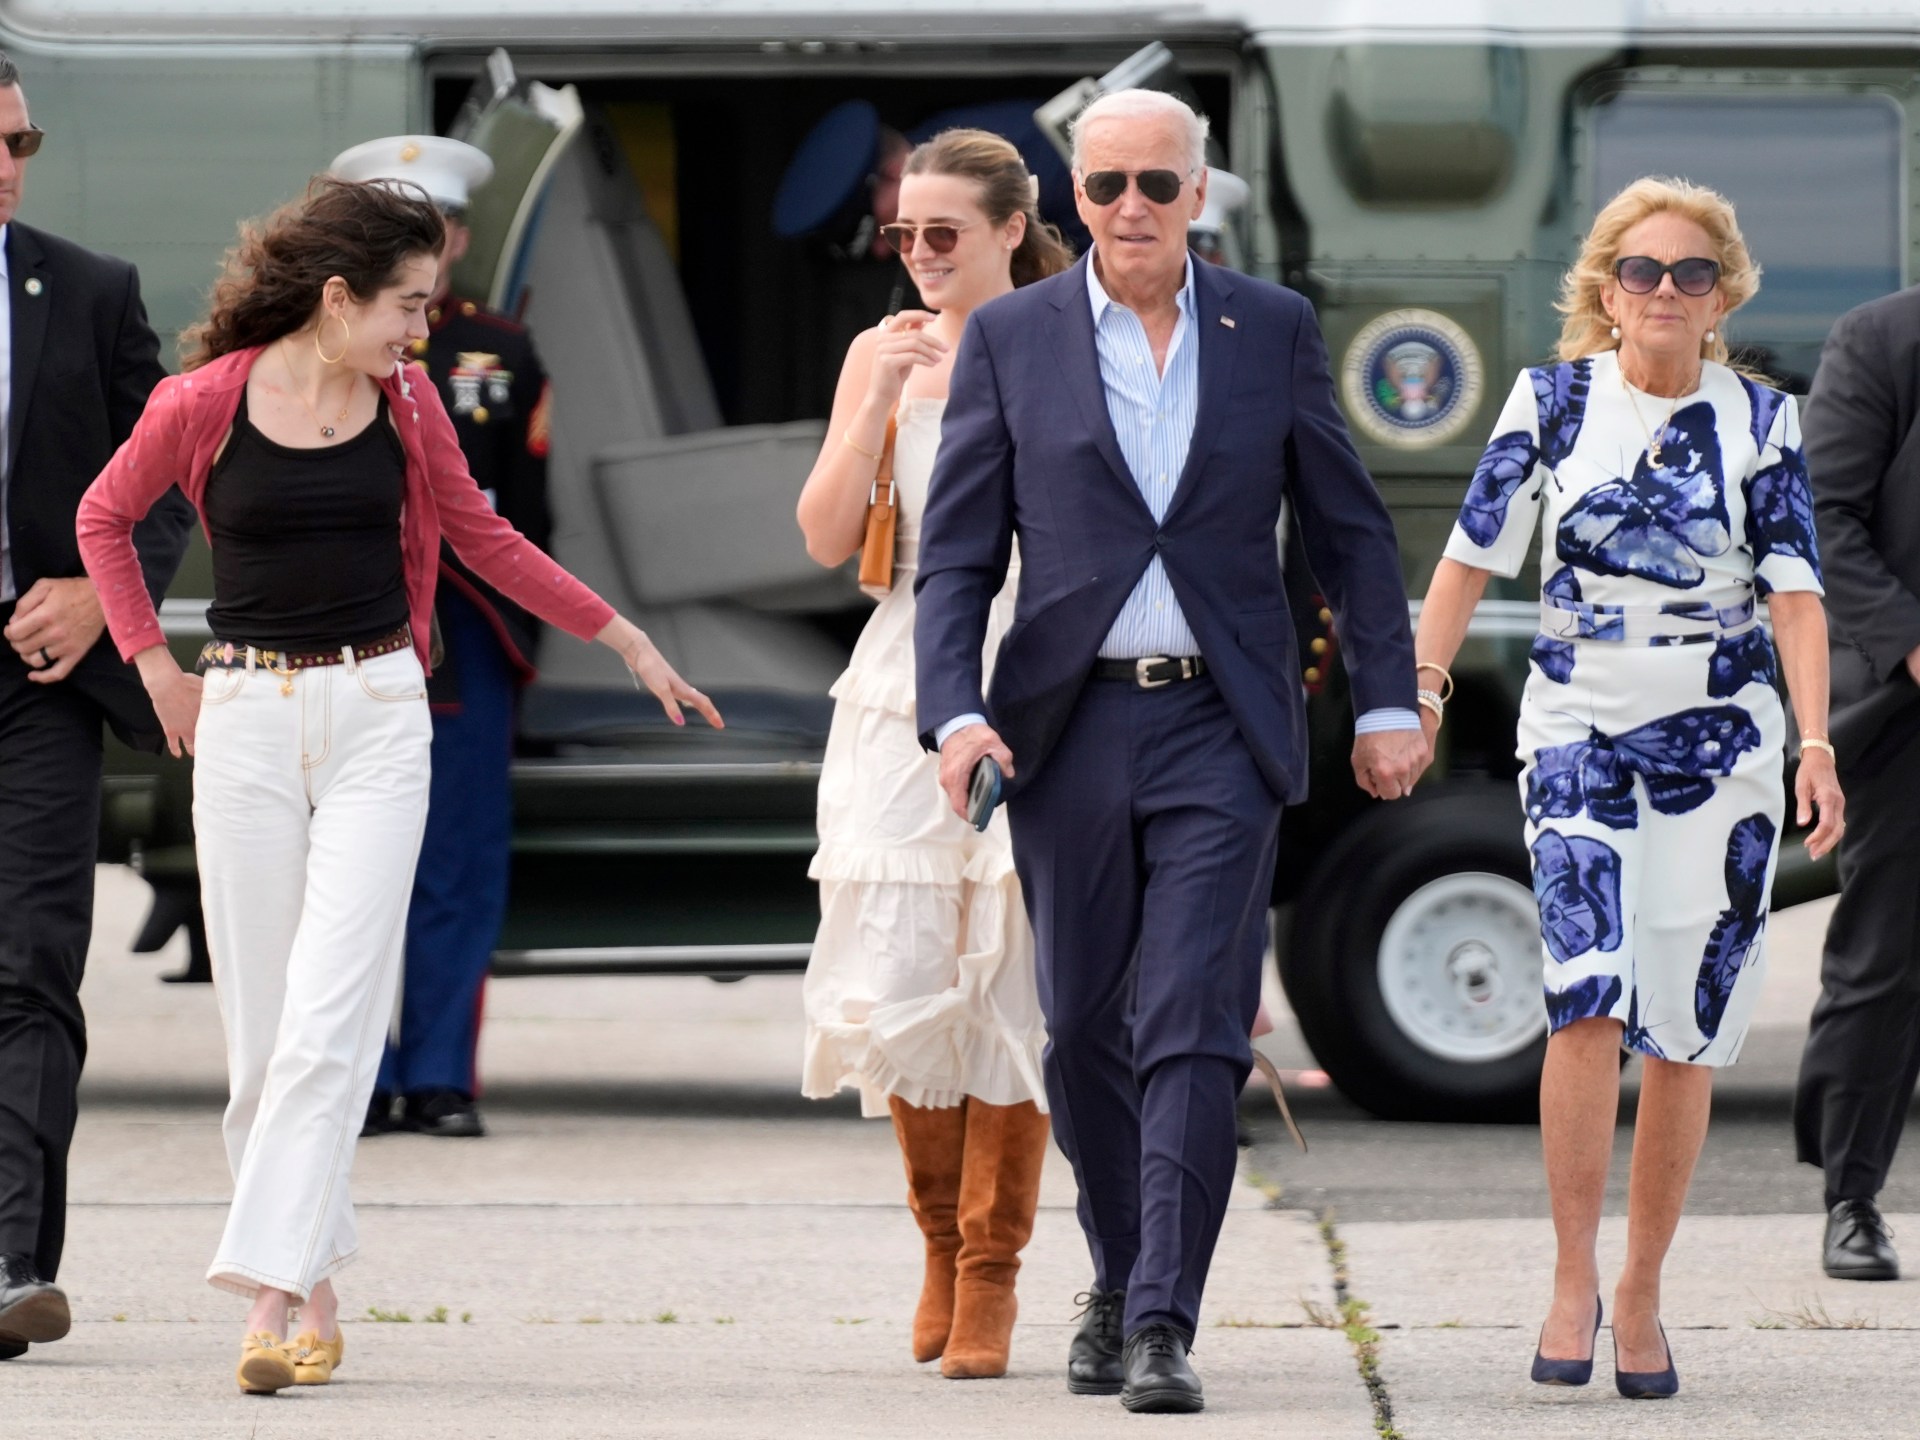 Biden’s family tells him to stay in US presidential race | Joe Biden News